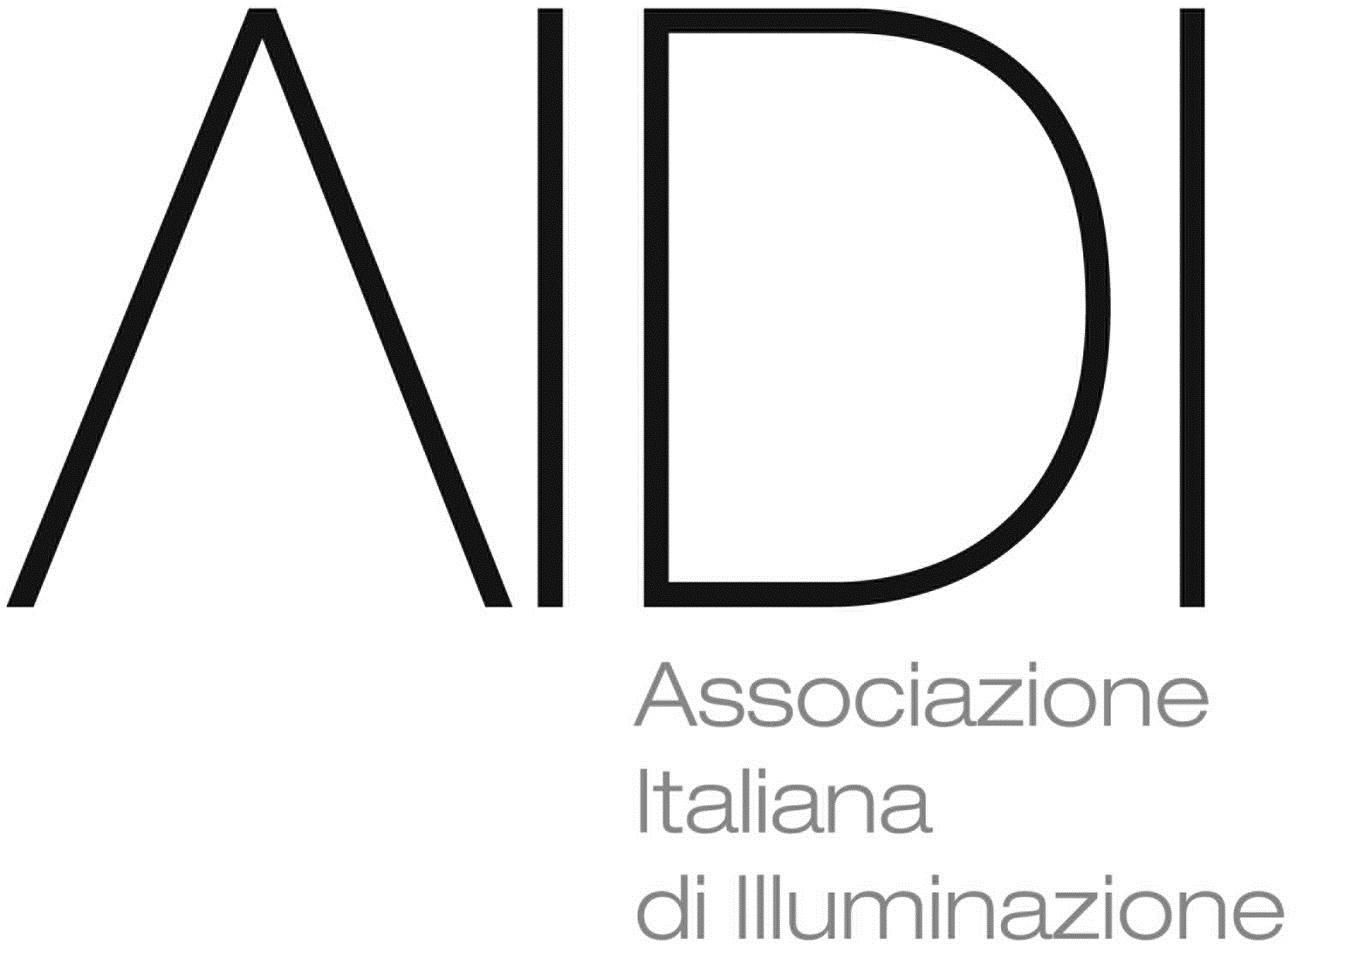 Associazione Italiana di Illuminazione